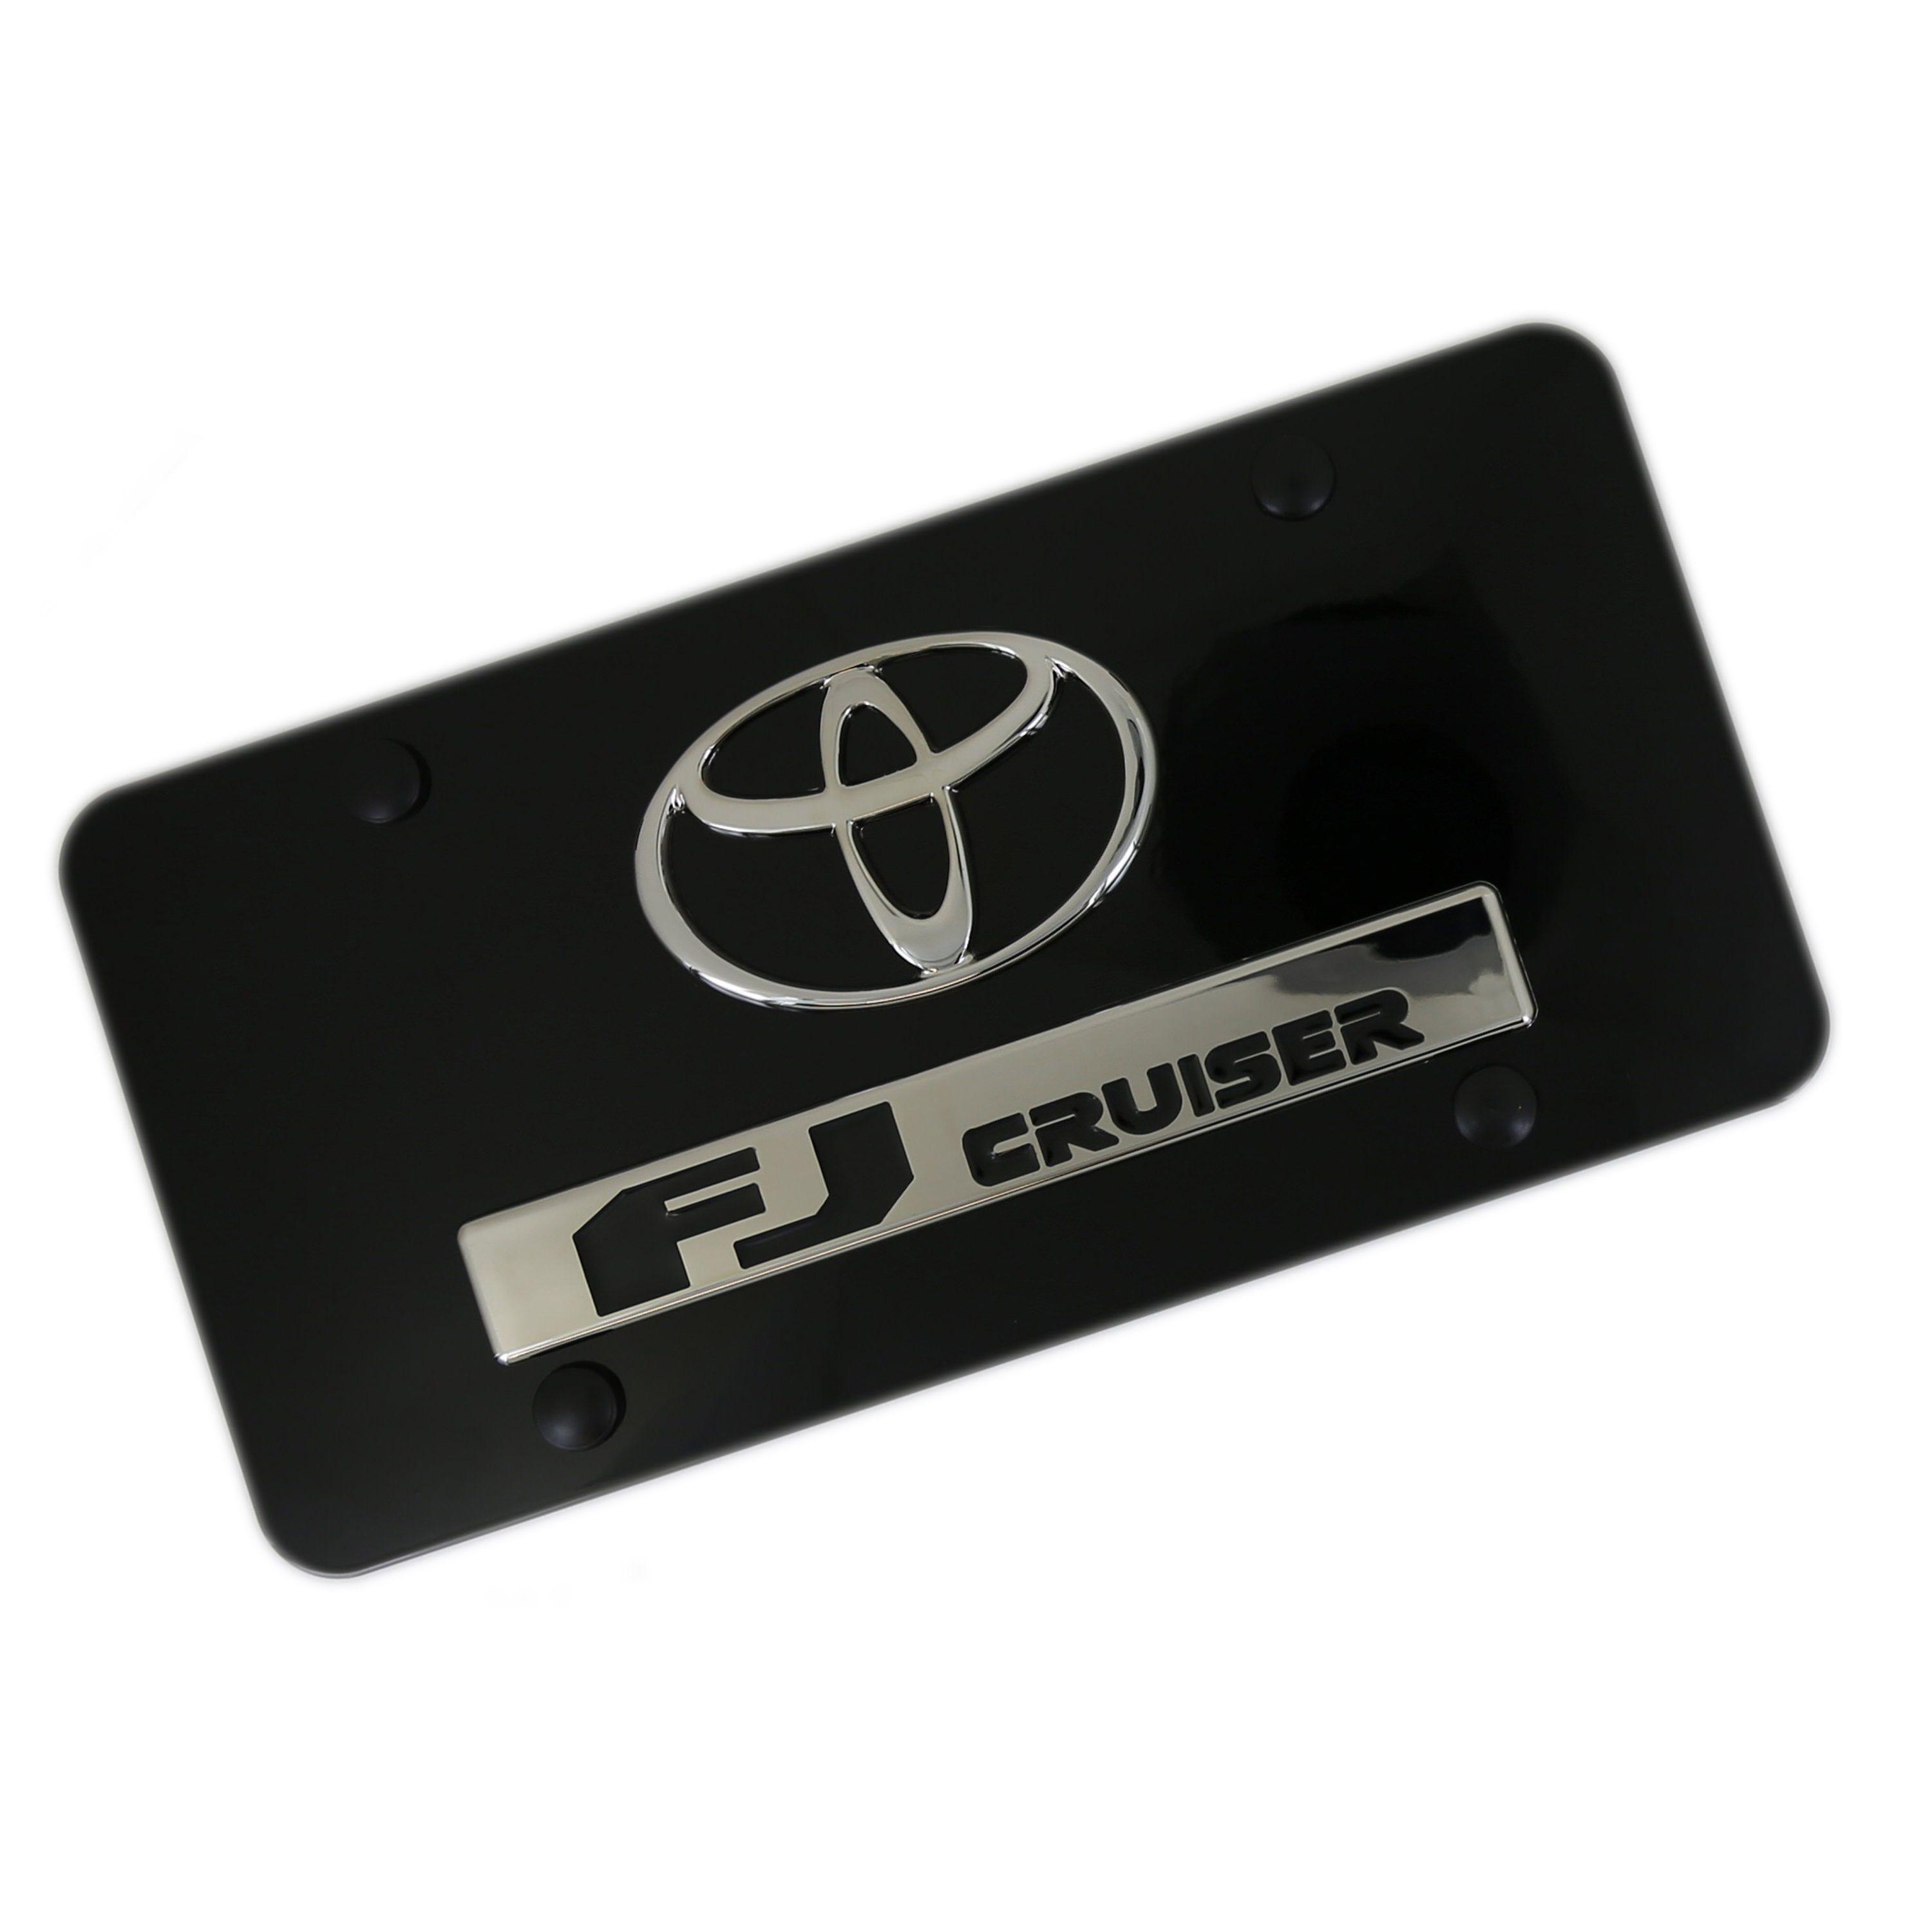 FJ Logo - Details about Toyota Logo + FJ Cruiser Name Badge On Black License Plate